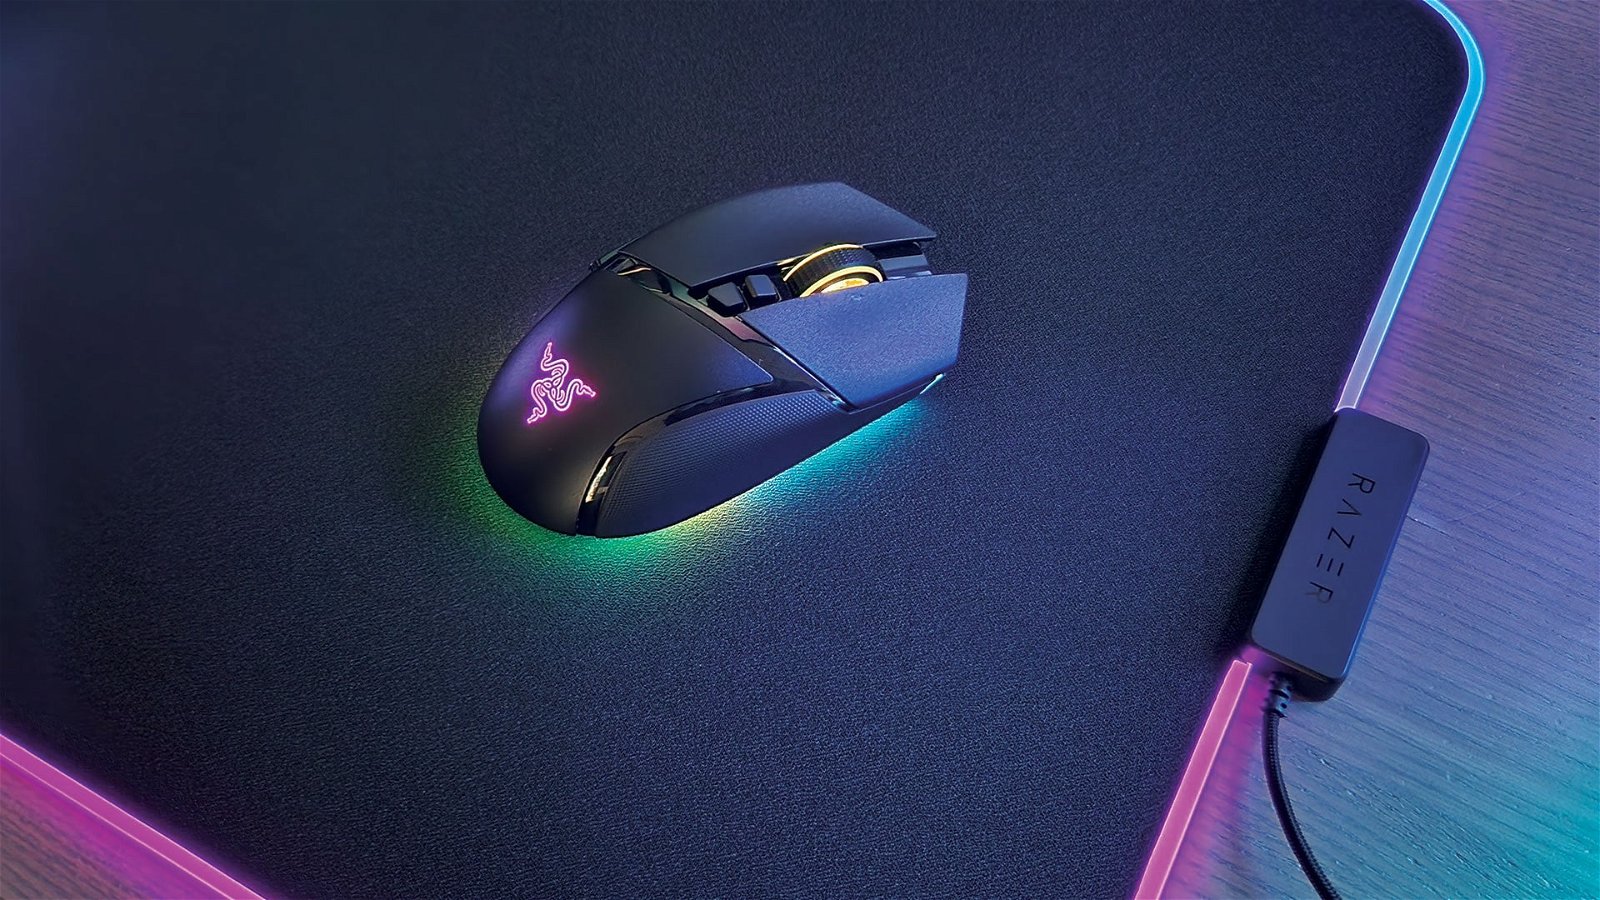 Razer Basilisk V3 Pro Review: Our Favorite Wireless Gaming Mouse